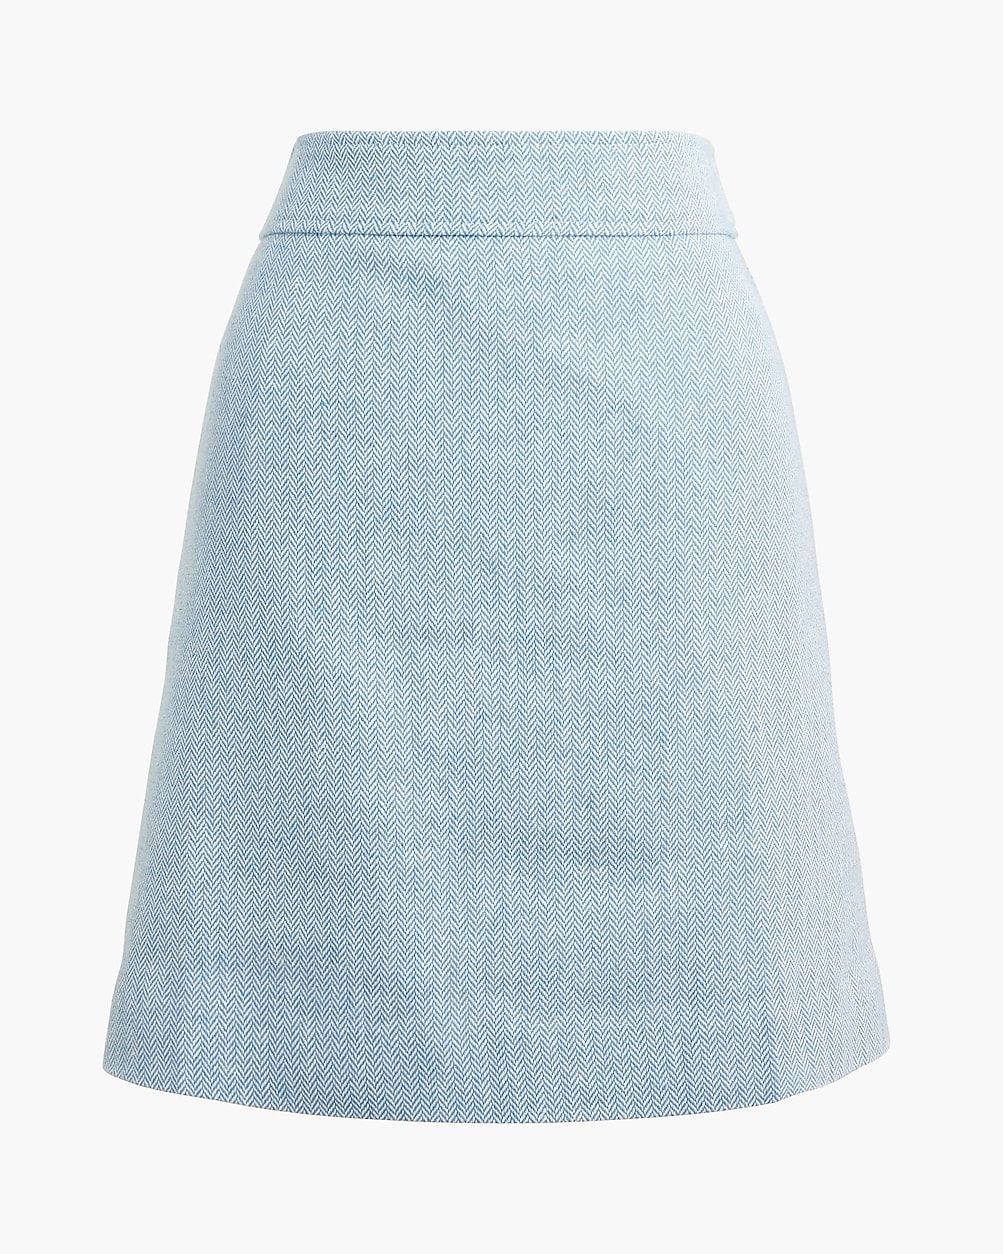 Herringbone A-line skirt | J.Crew Factory